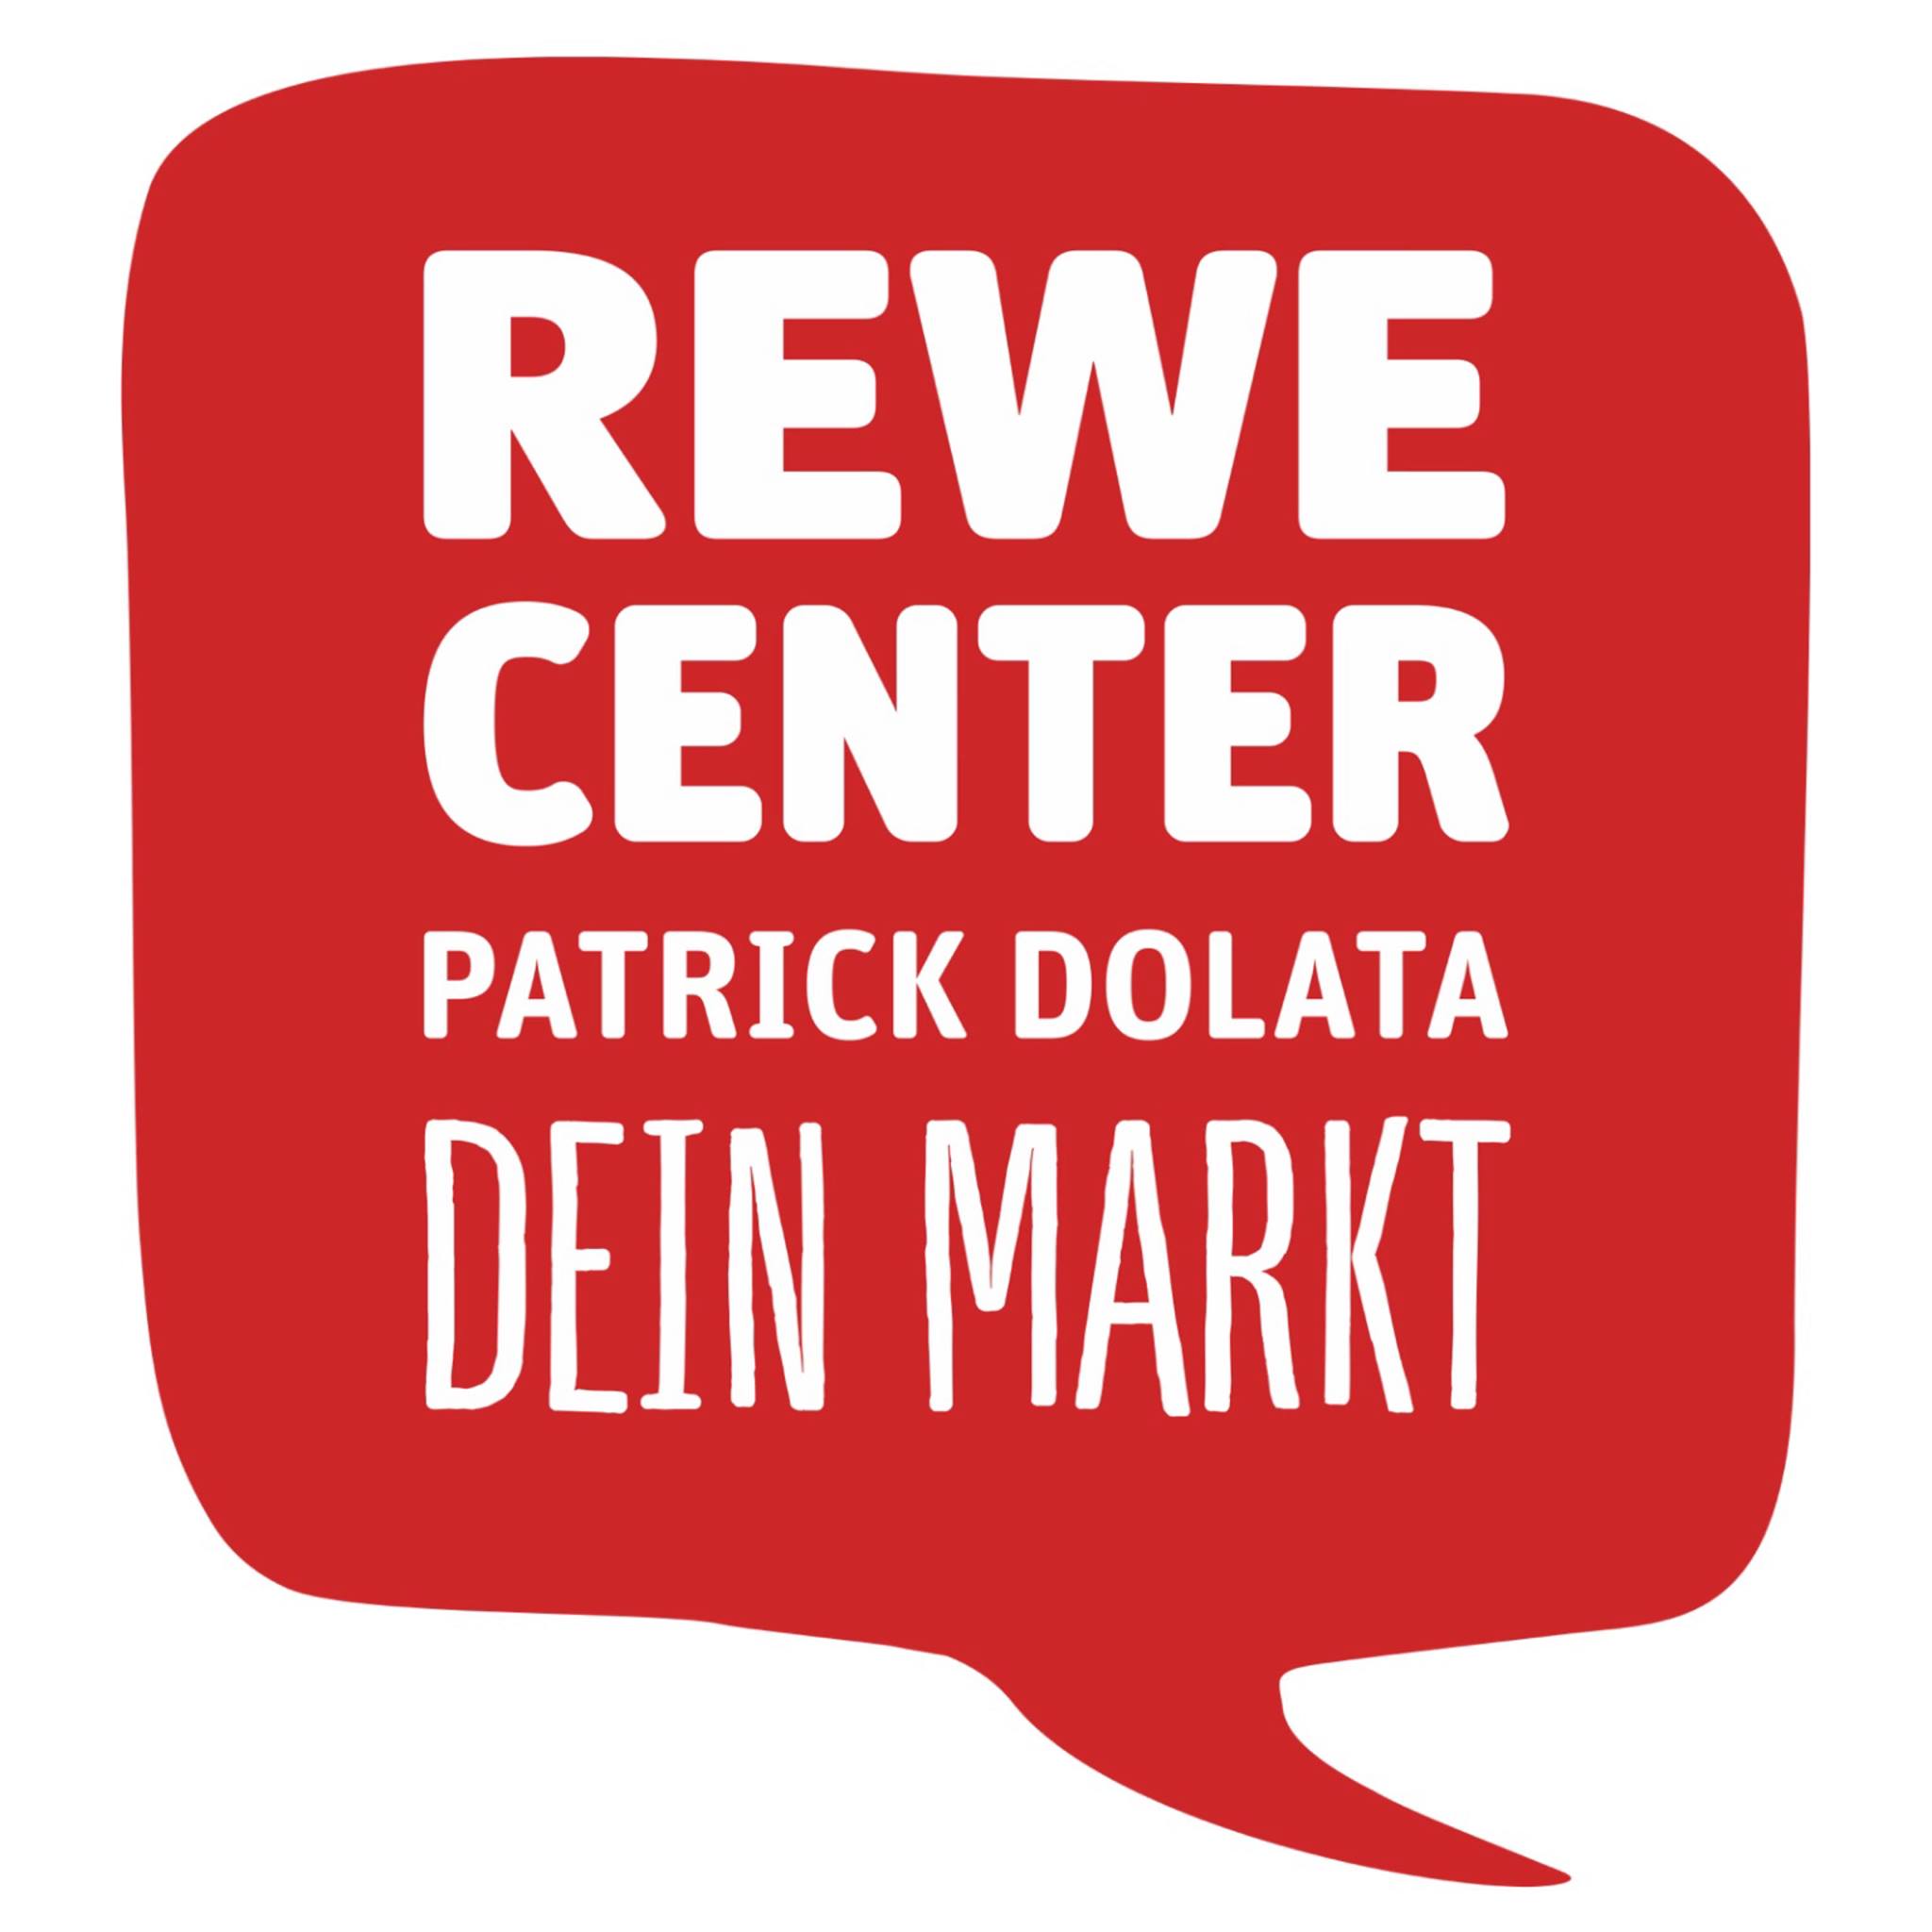 Rewe Center Patrick Dolata